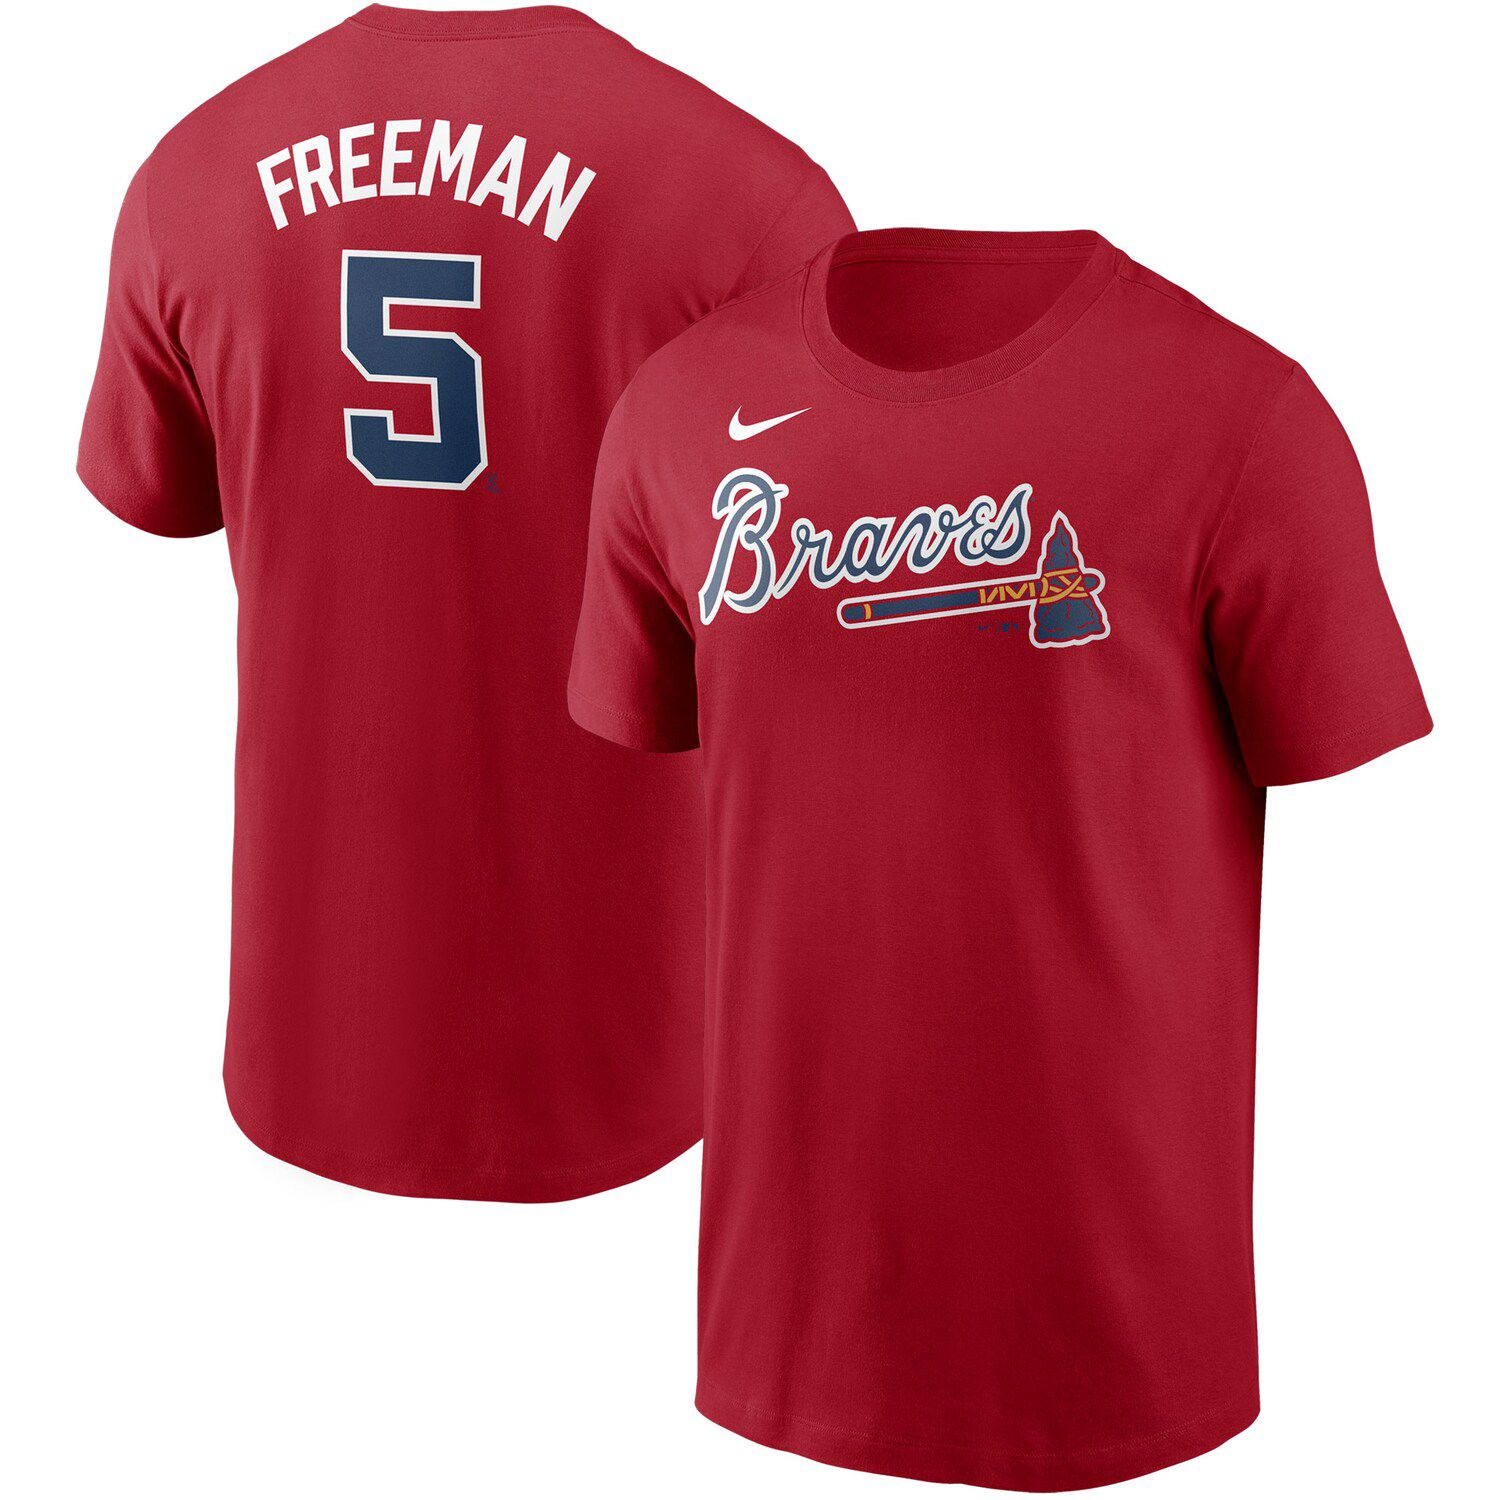 freddie freeman youth jersey